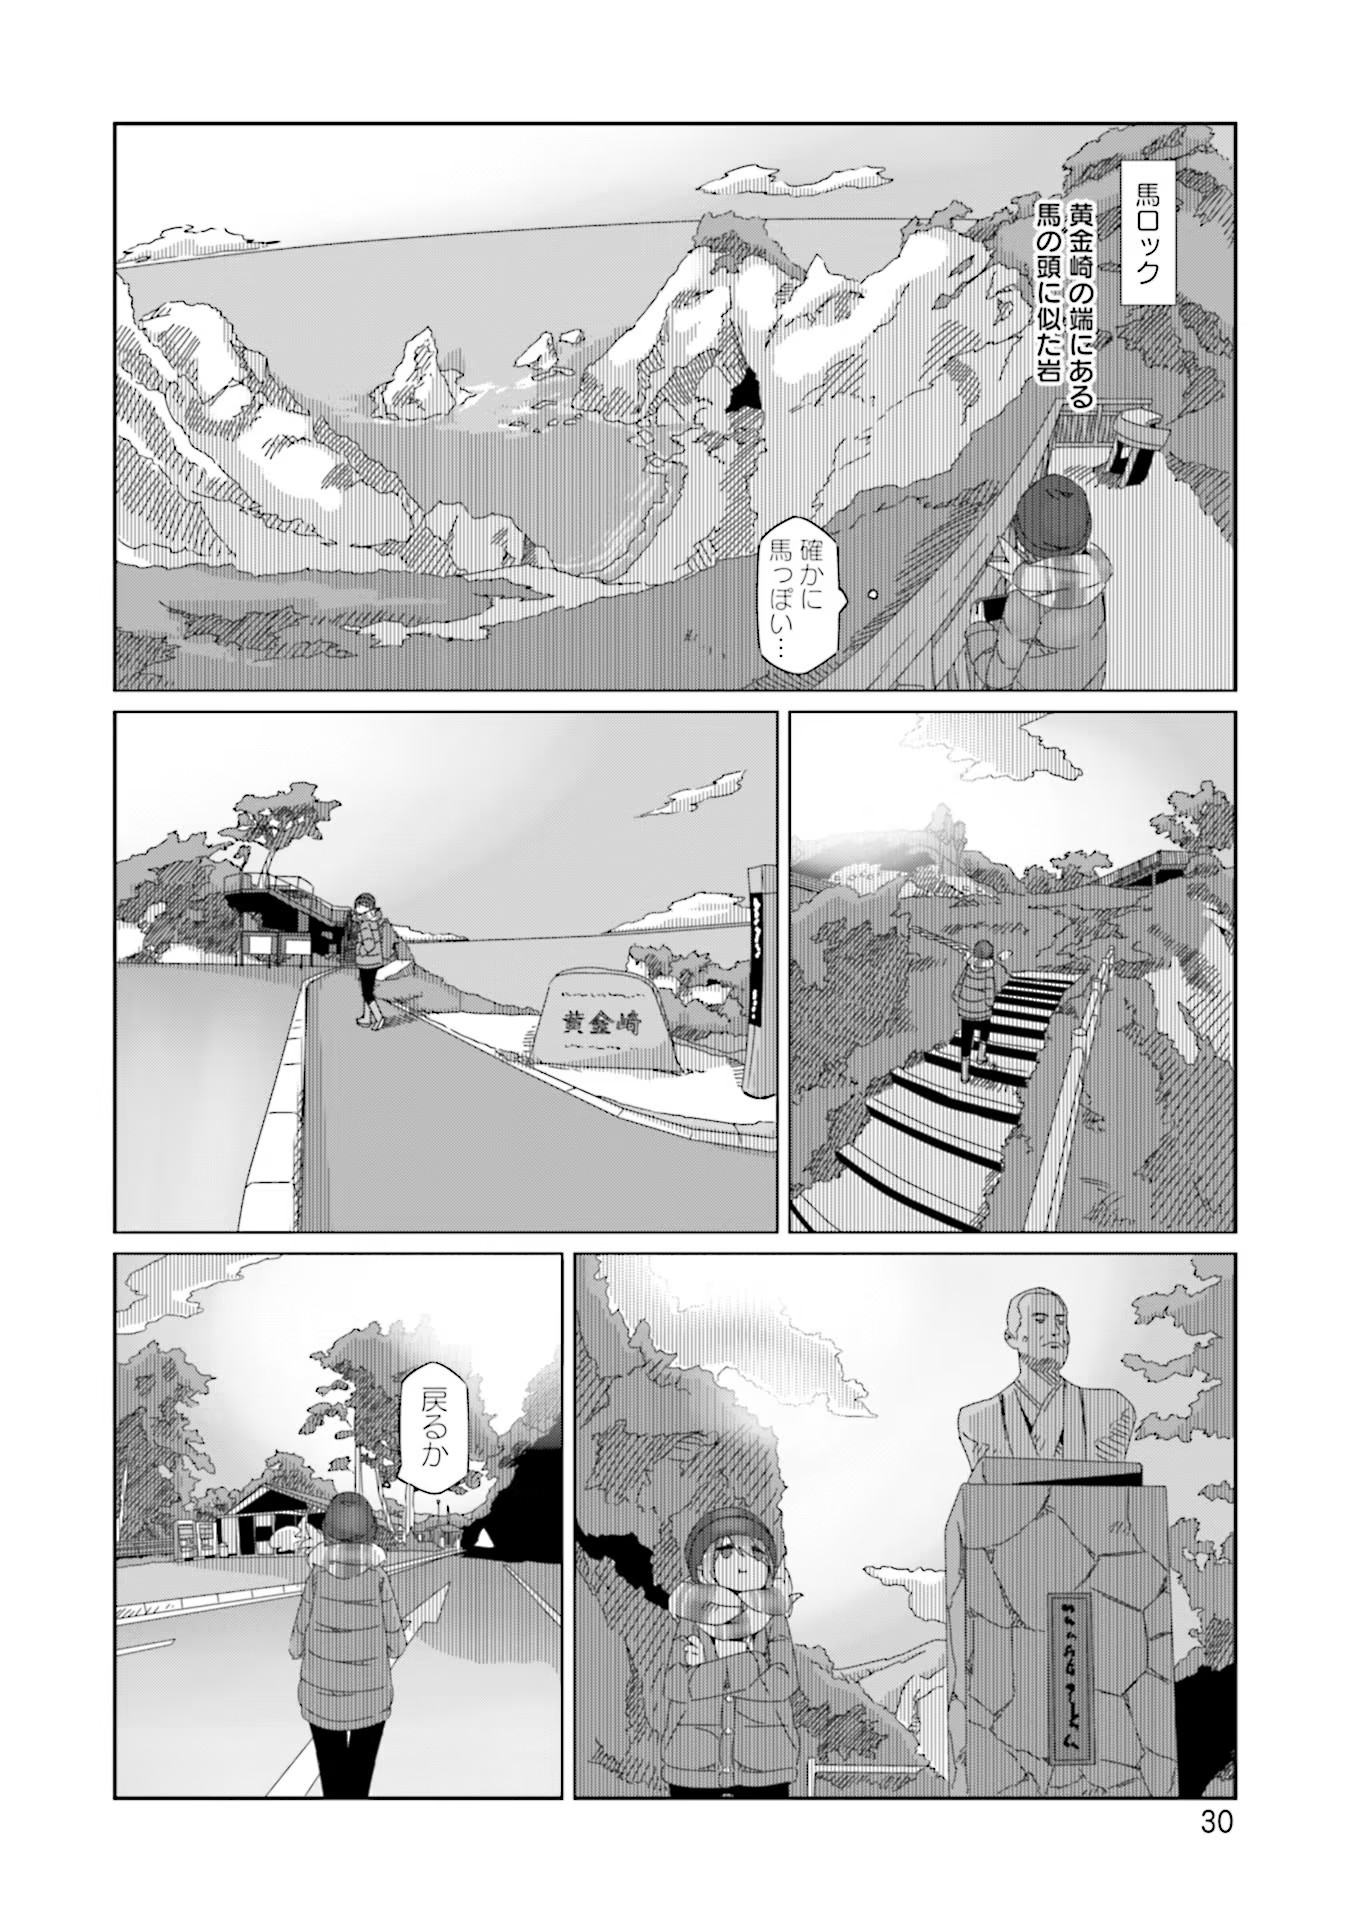 Yuru Camp - Chapter 48 - Page 2